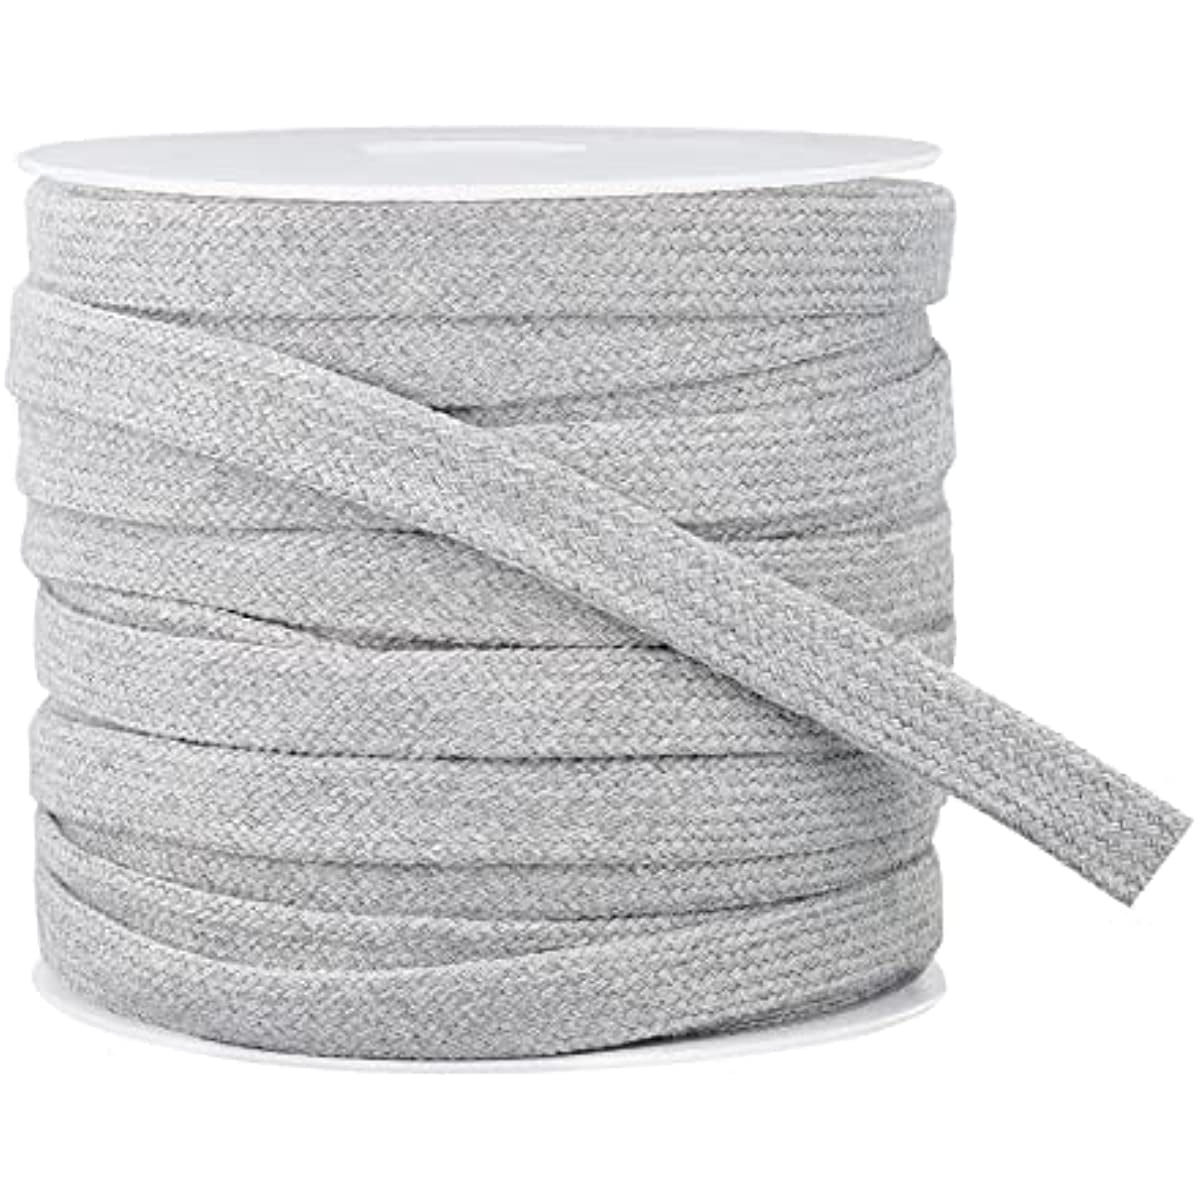 (12 Pack) 1 Dozen - Durable Cotton Drawstring Tote Bags (Navy)